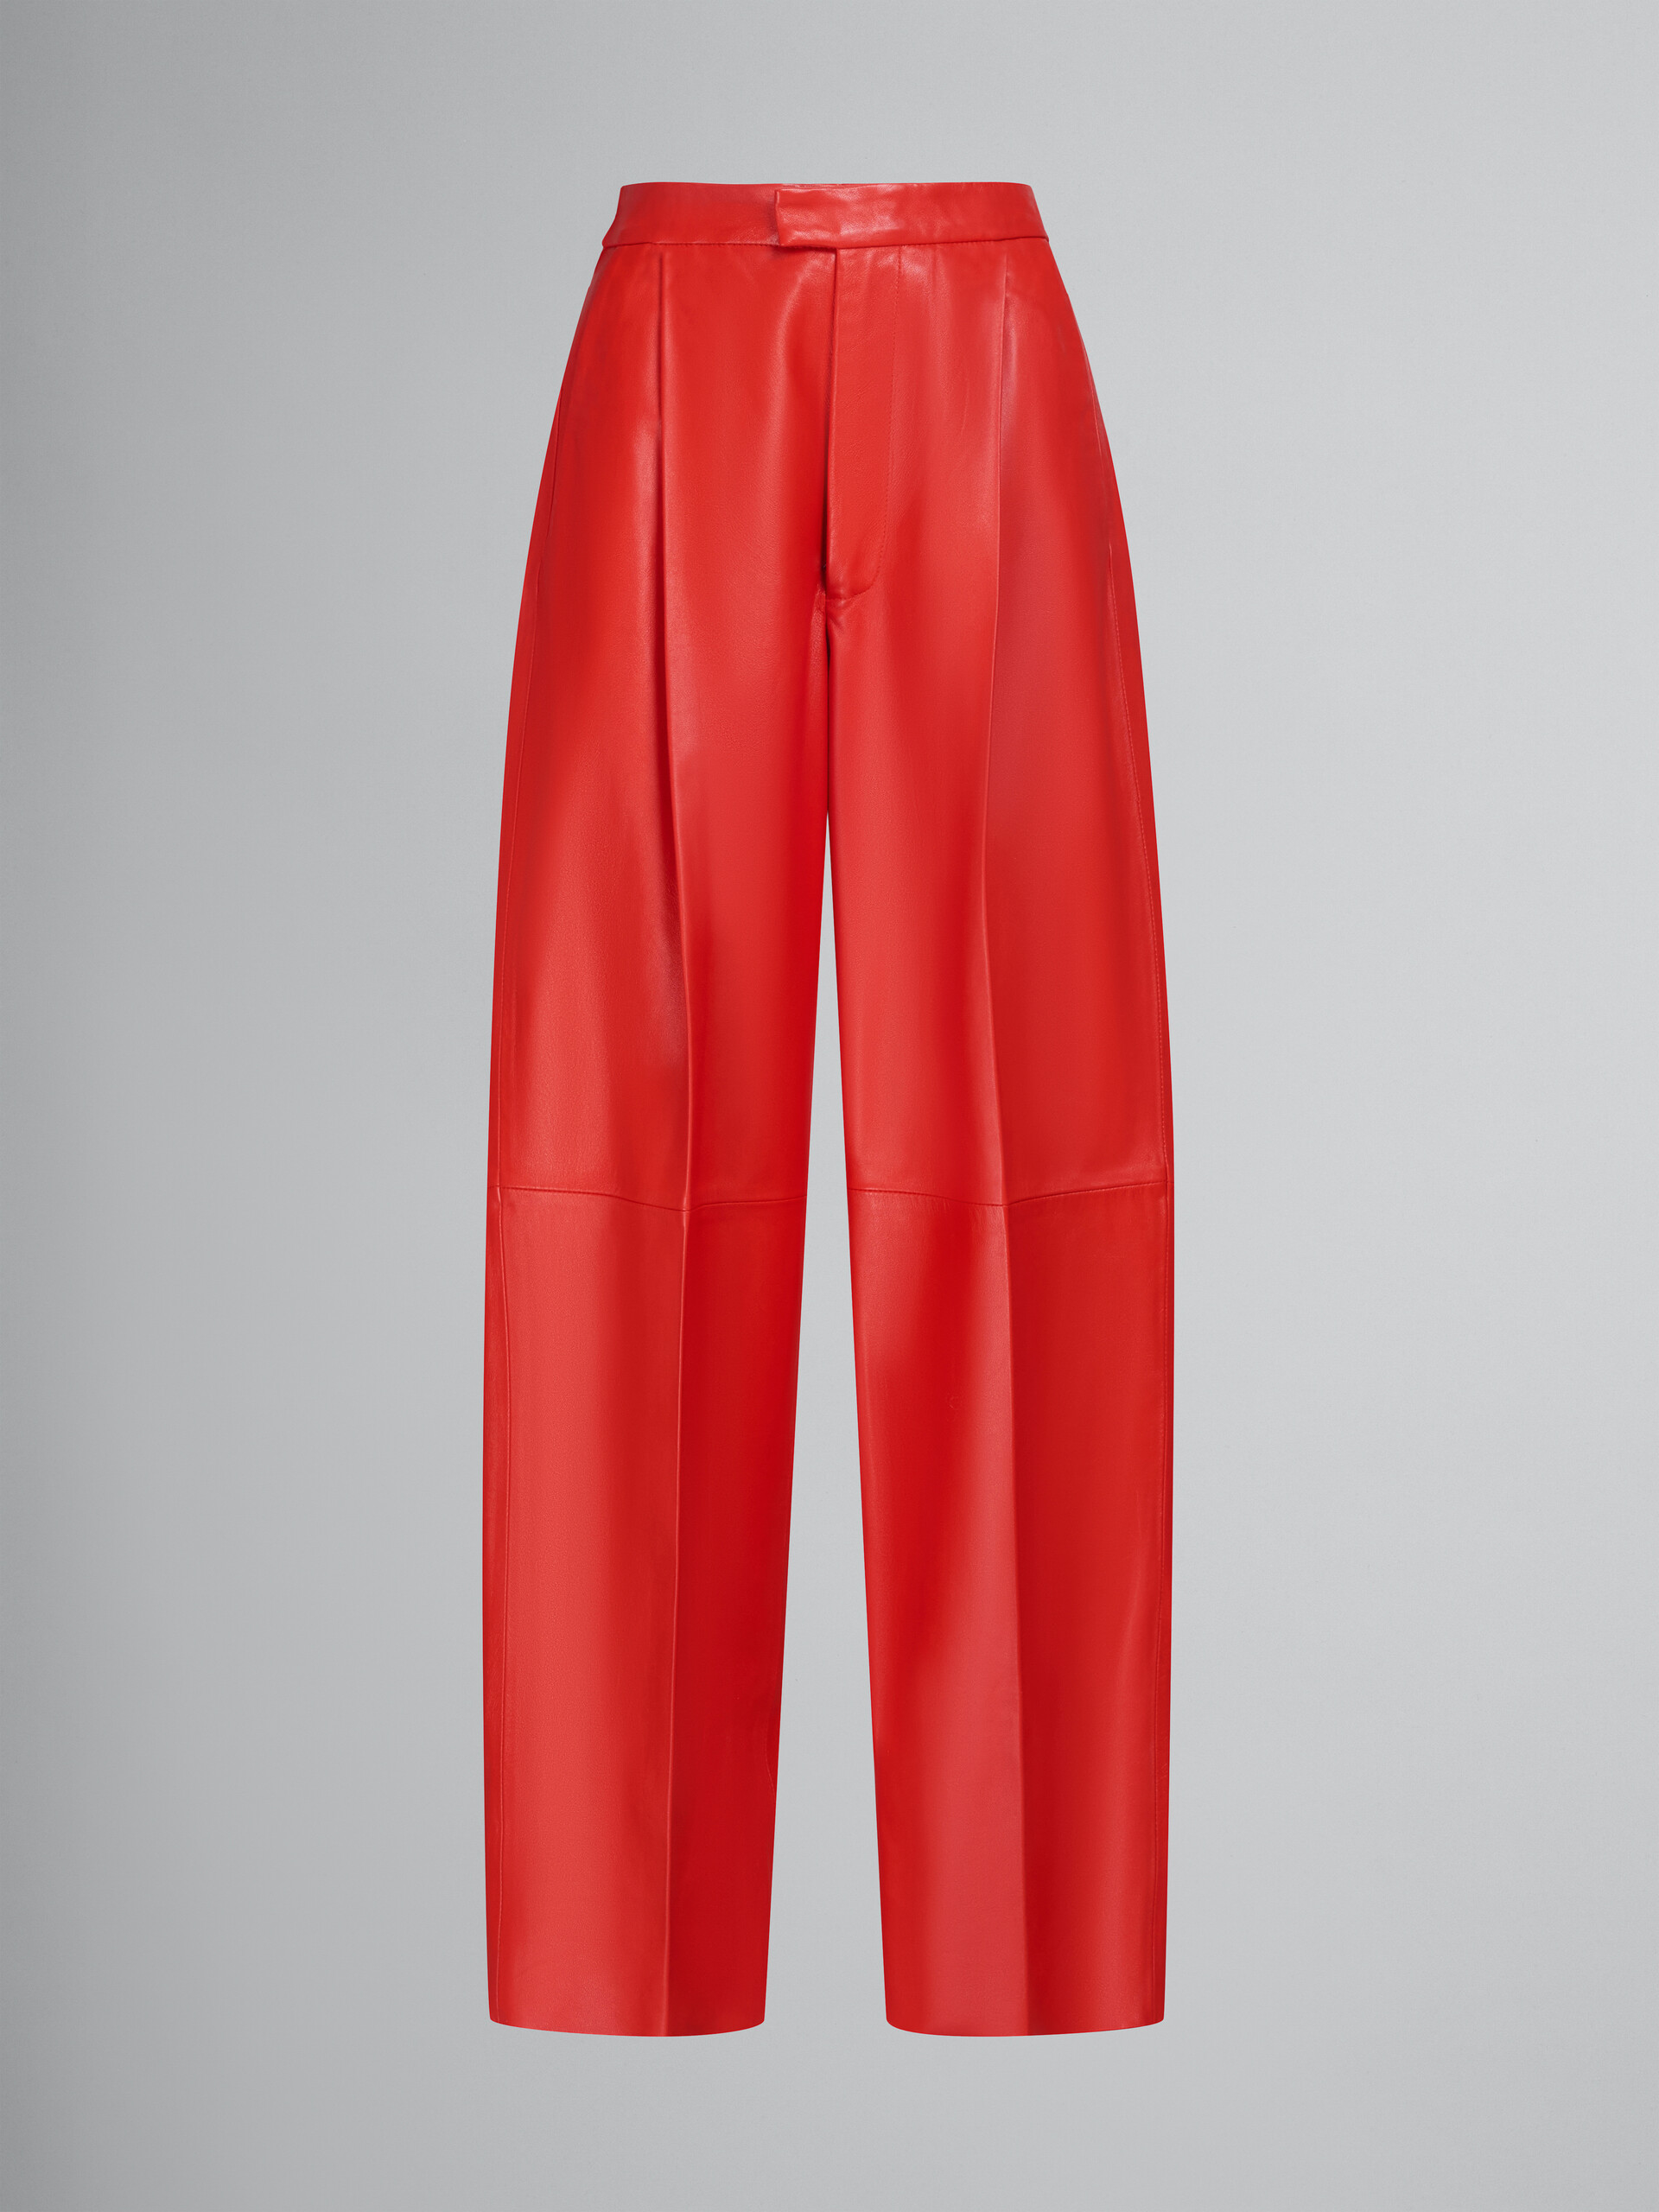 Pantaloni sartoriali in nappa rossa - Pantaloni - Image 1